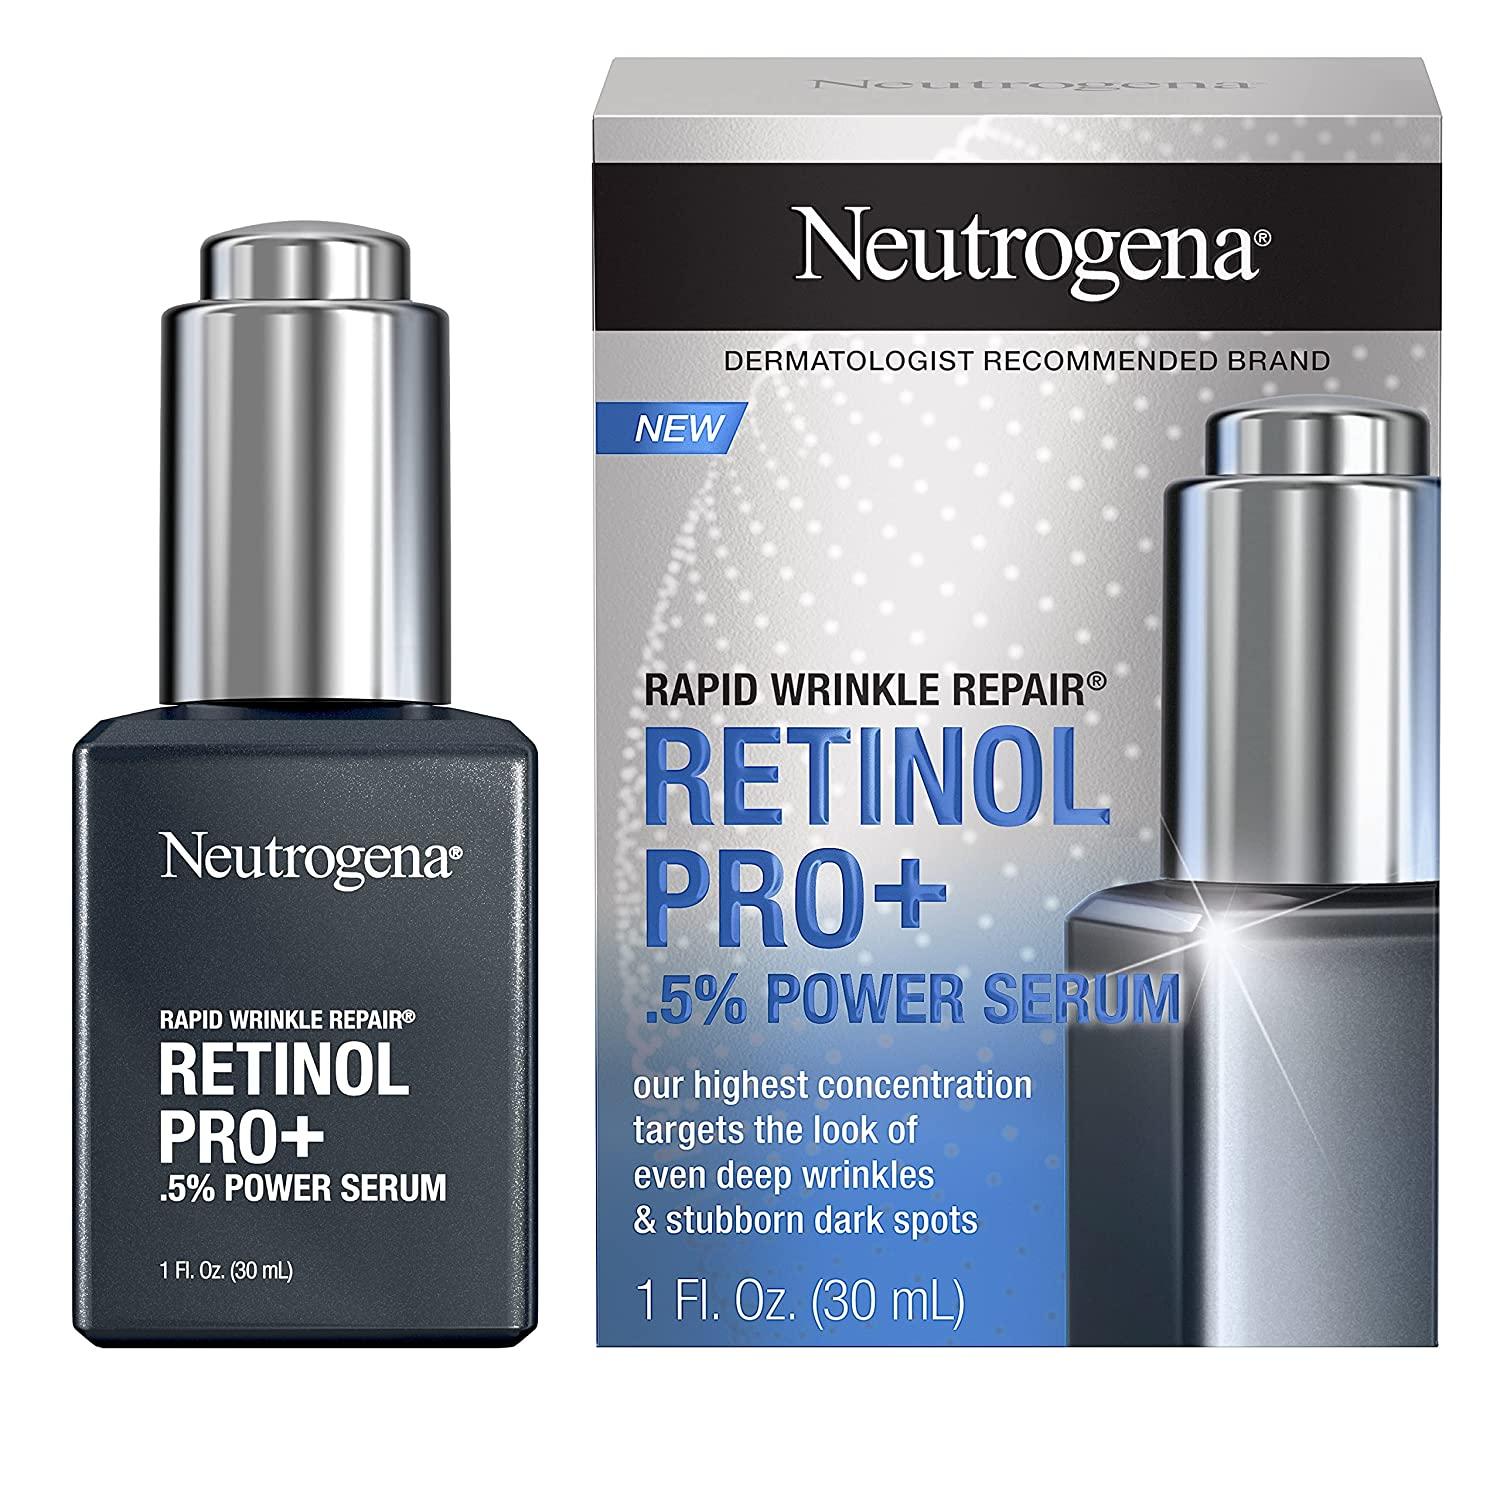 Neutrogena Anti-Aging Rapid Wrinkle Repair Retinol Regenerating